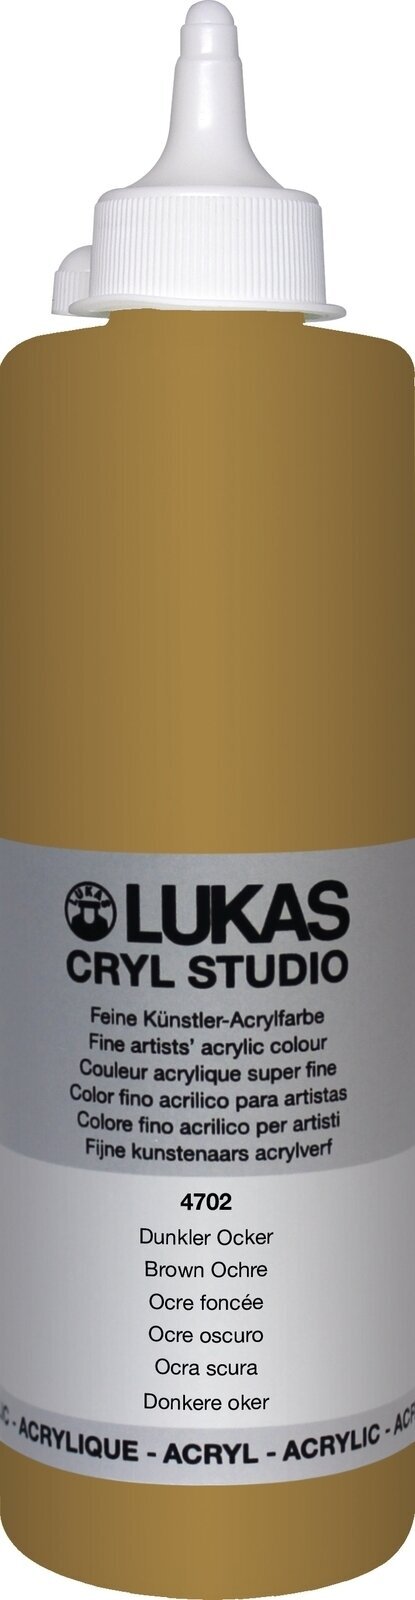 Acrylic Paint Lukas Cryl Studio Acrylic Paint 500 ml Brown Ochre